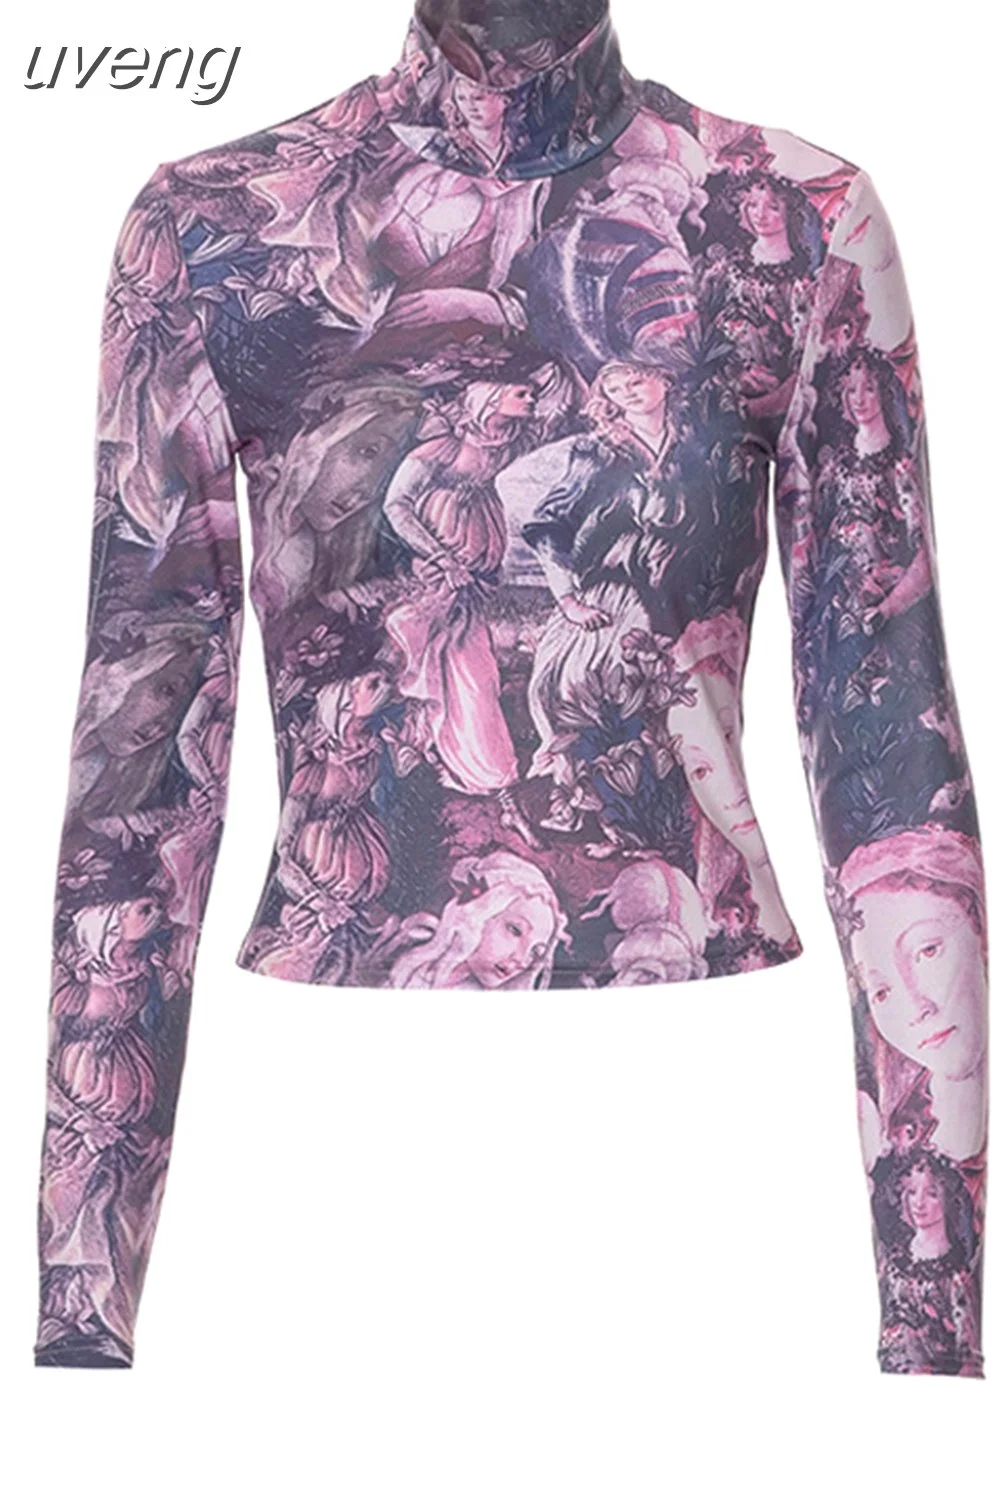 uveng Renaissance Vintage Print Purple Graphic T Shirts Turtleneck Long Sleeve Top Fall Winter Women Clothing P85-BZ16